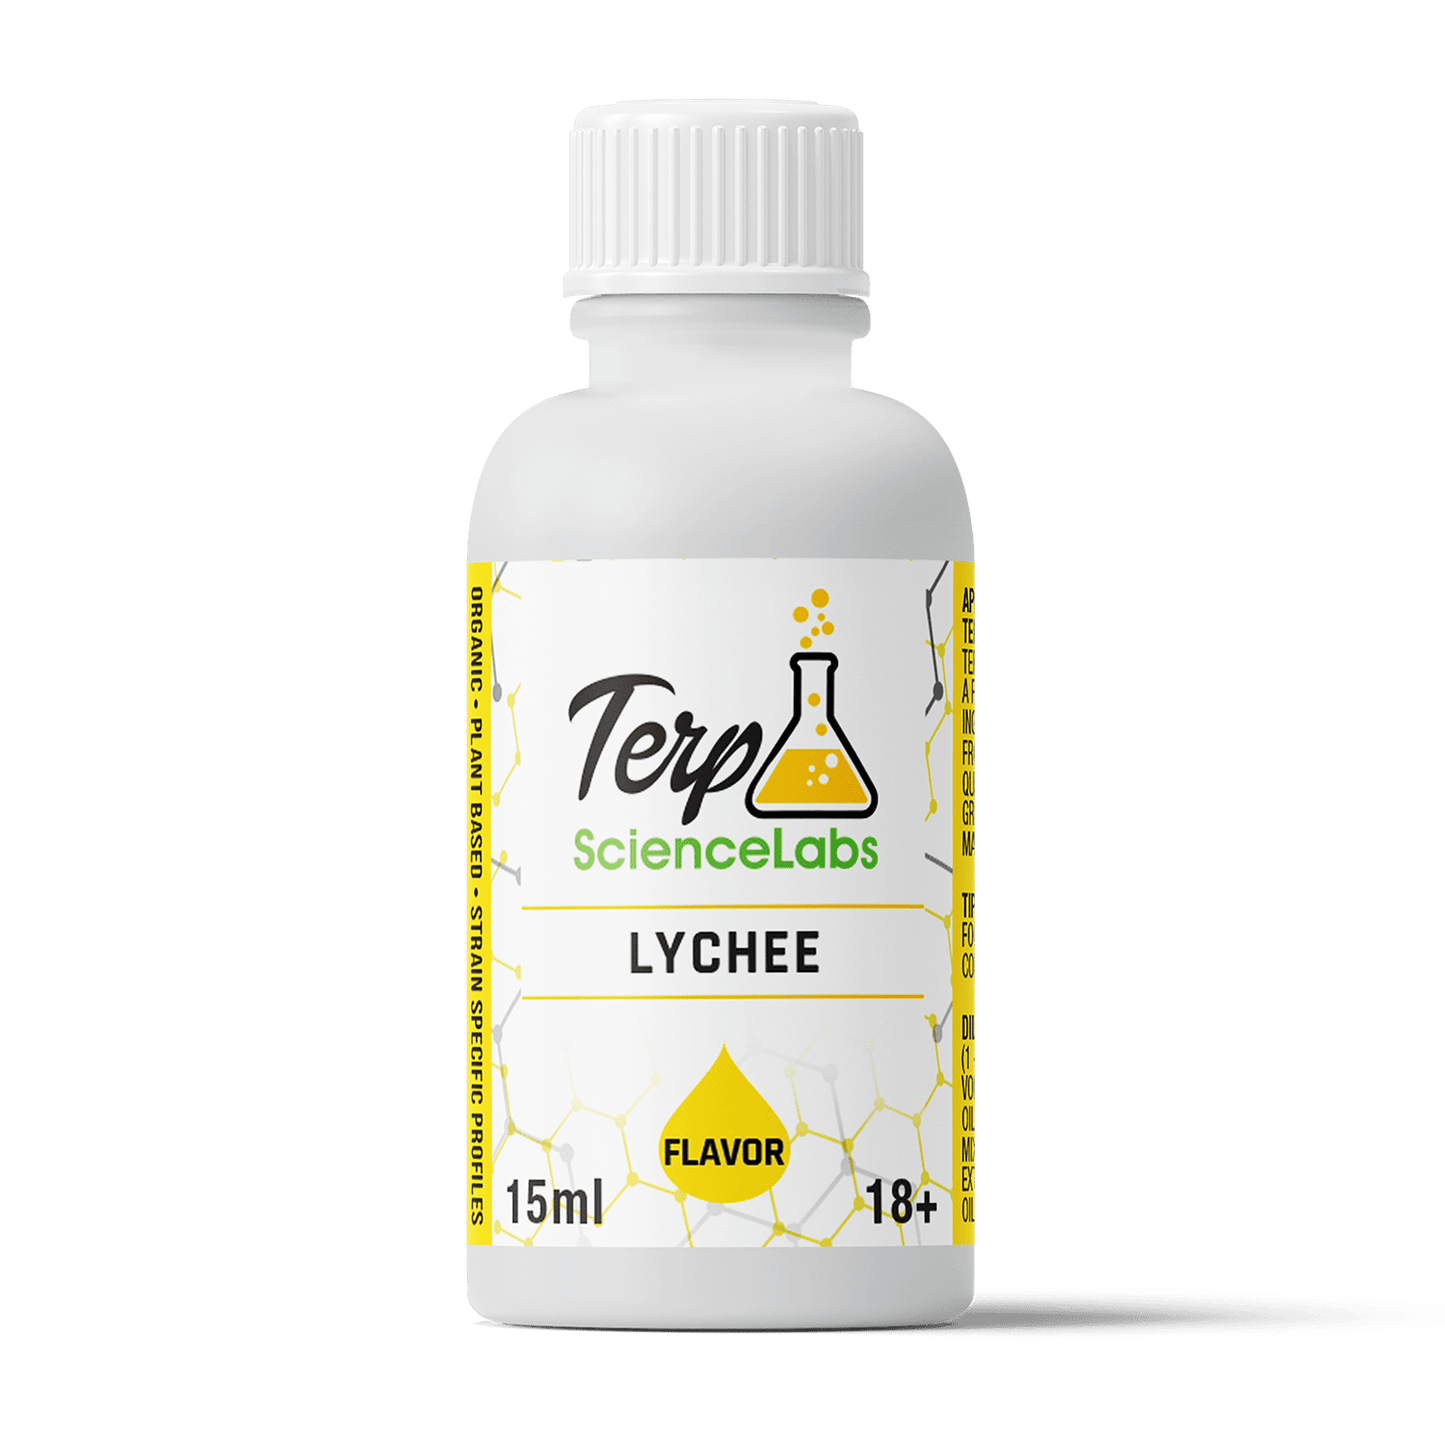 Lychee Flavor Profile